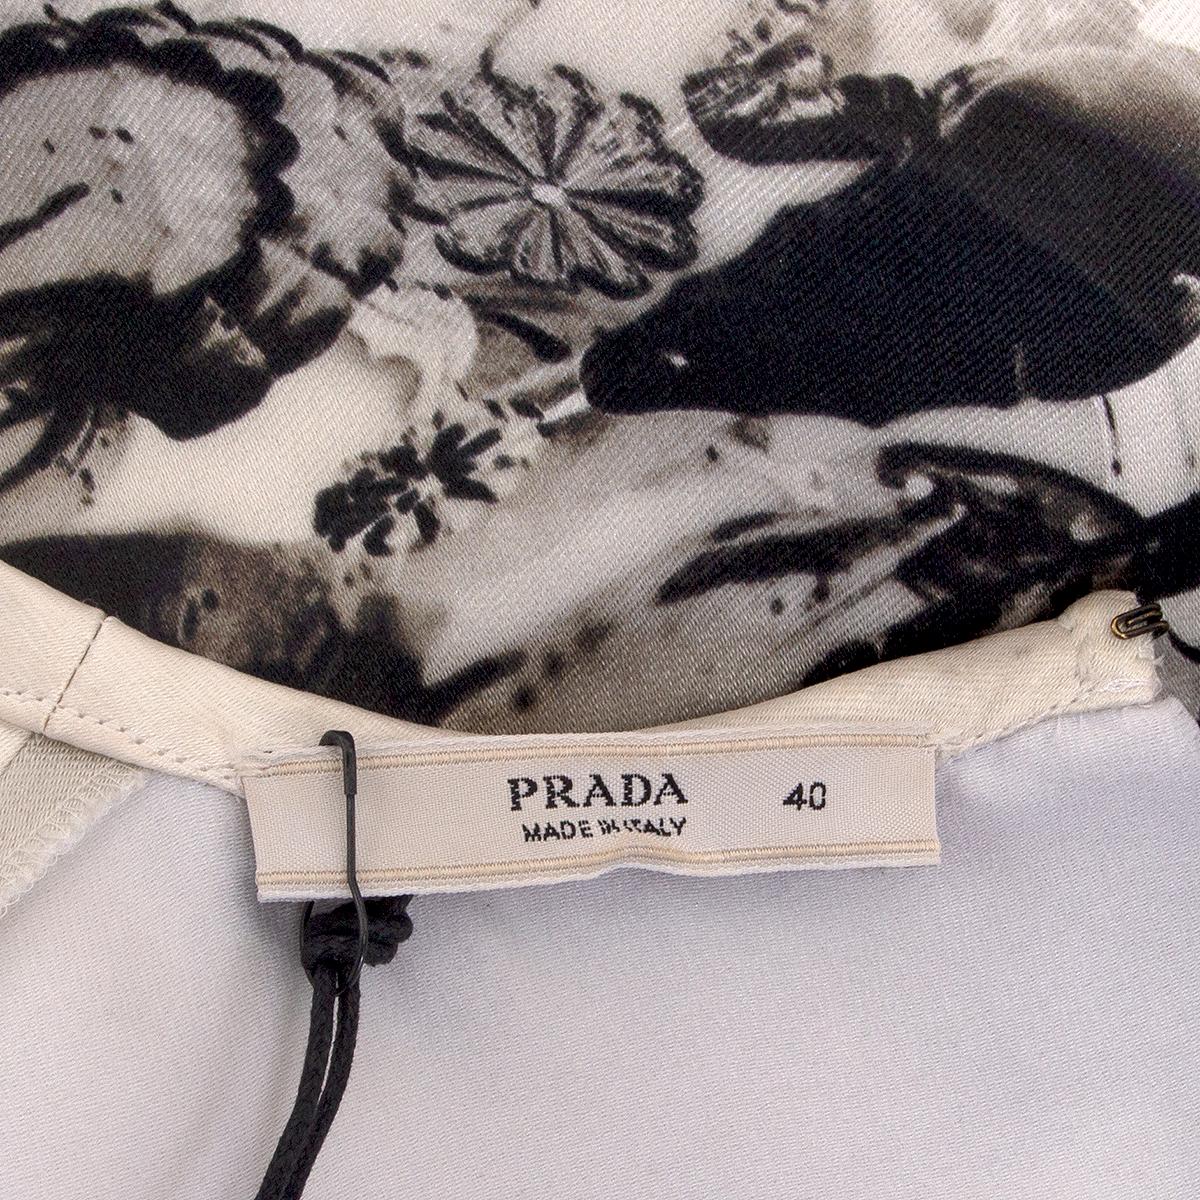 Women's PRADA black & white silk CHANDELIER PRINT OPEN BACK Tank Top Shirt 40 S